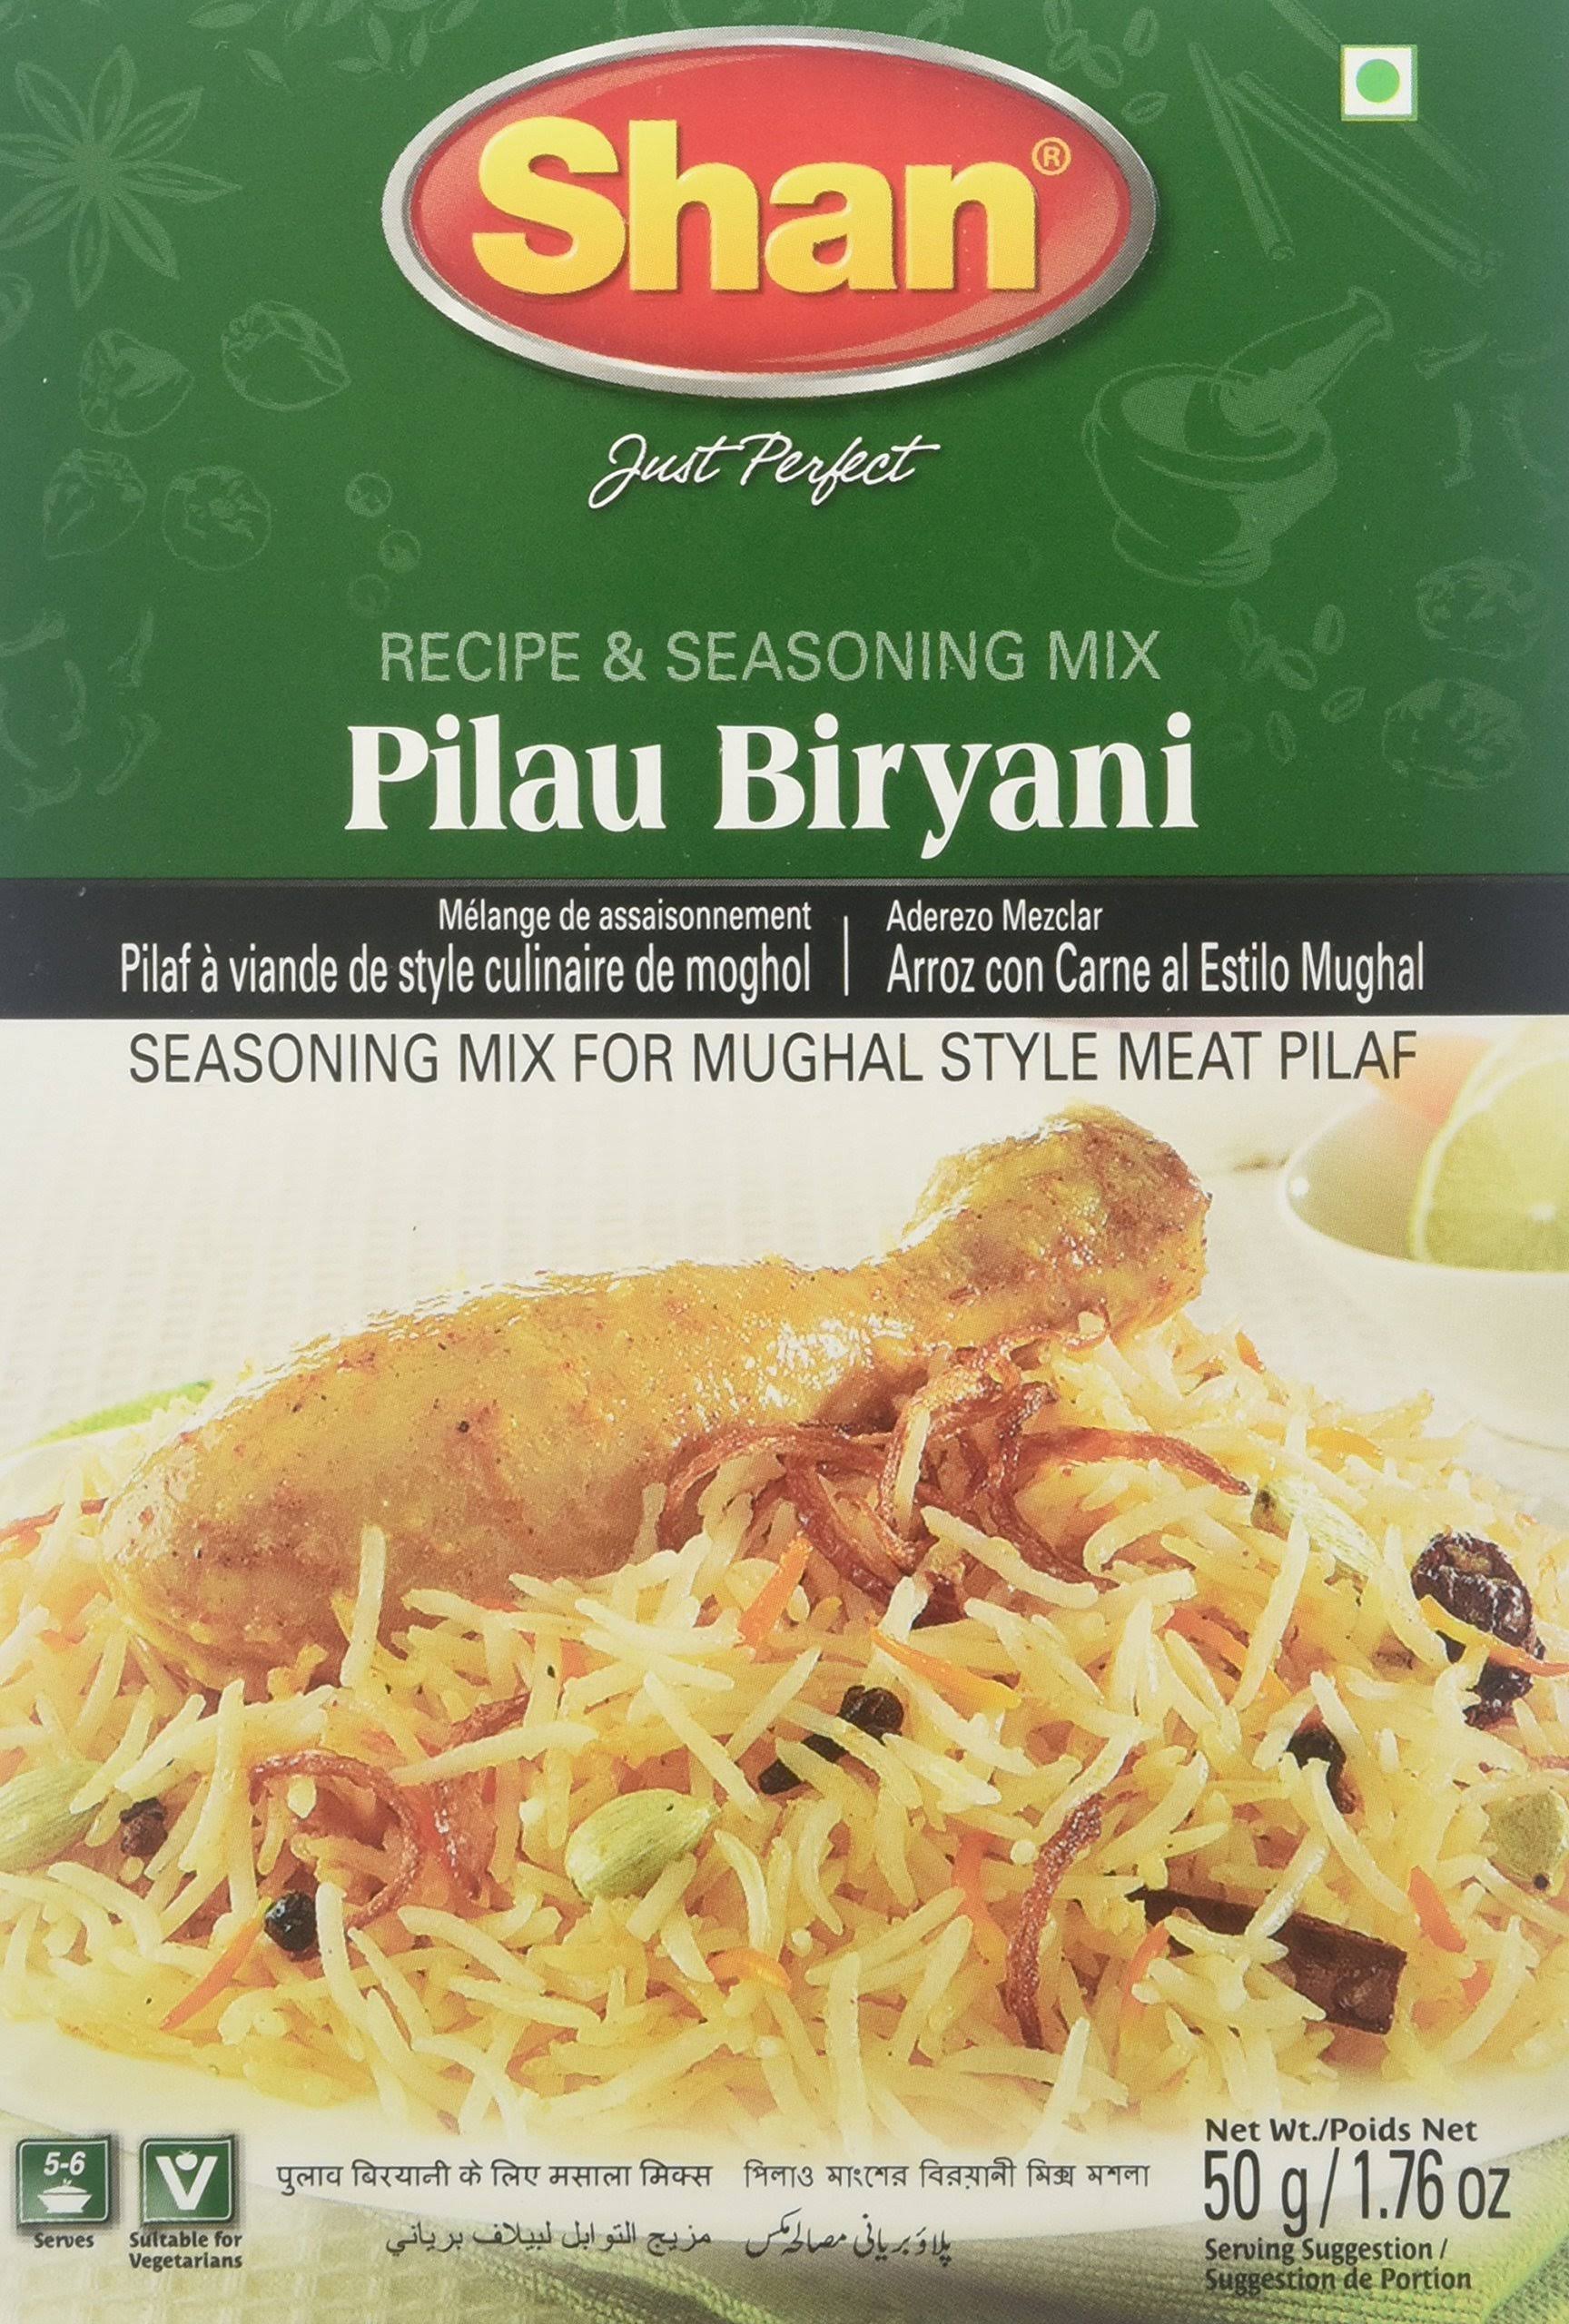 Shan Pilau Biryani Mix